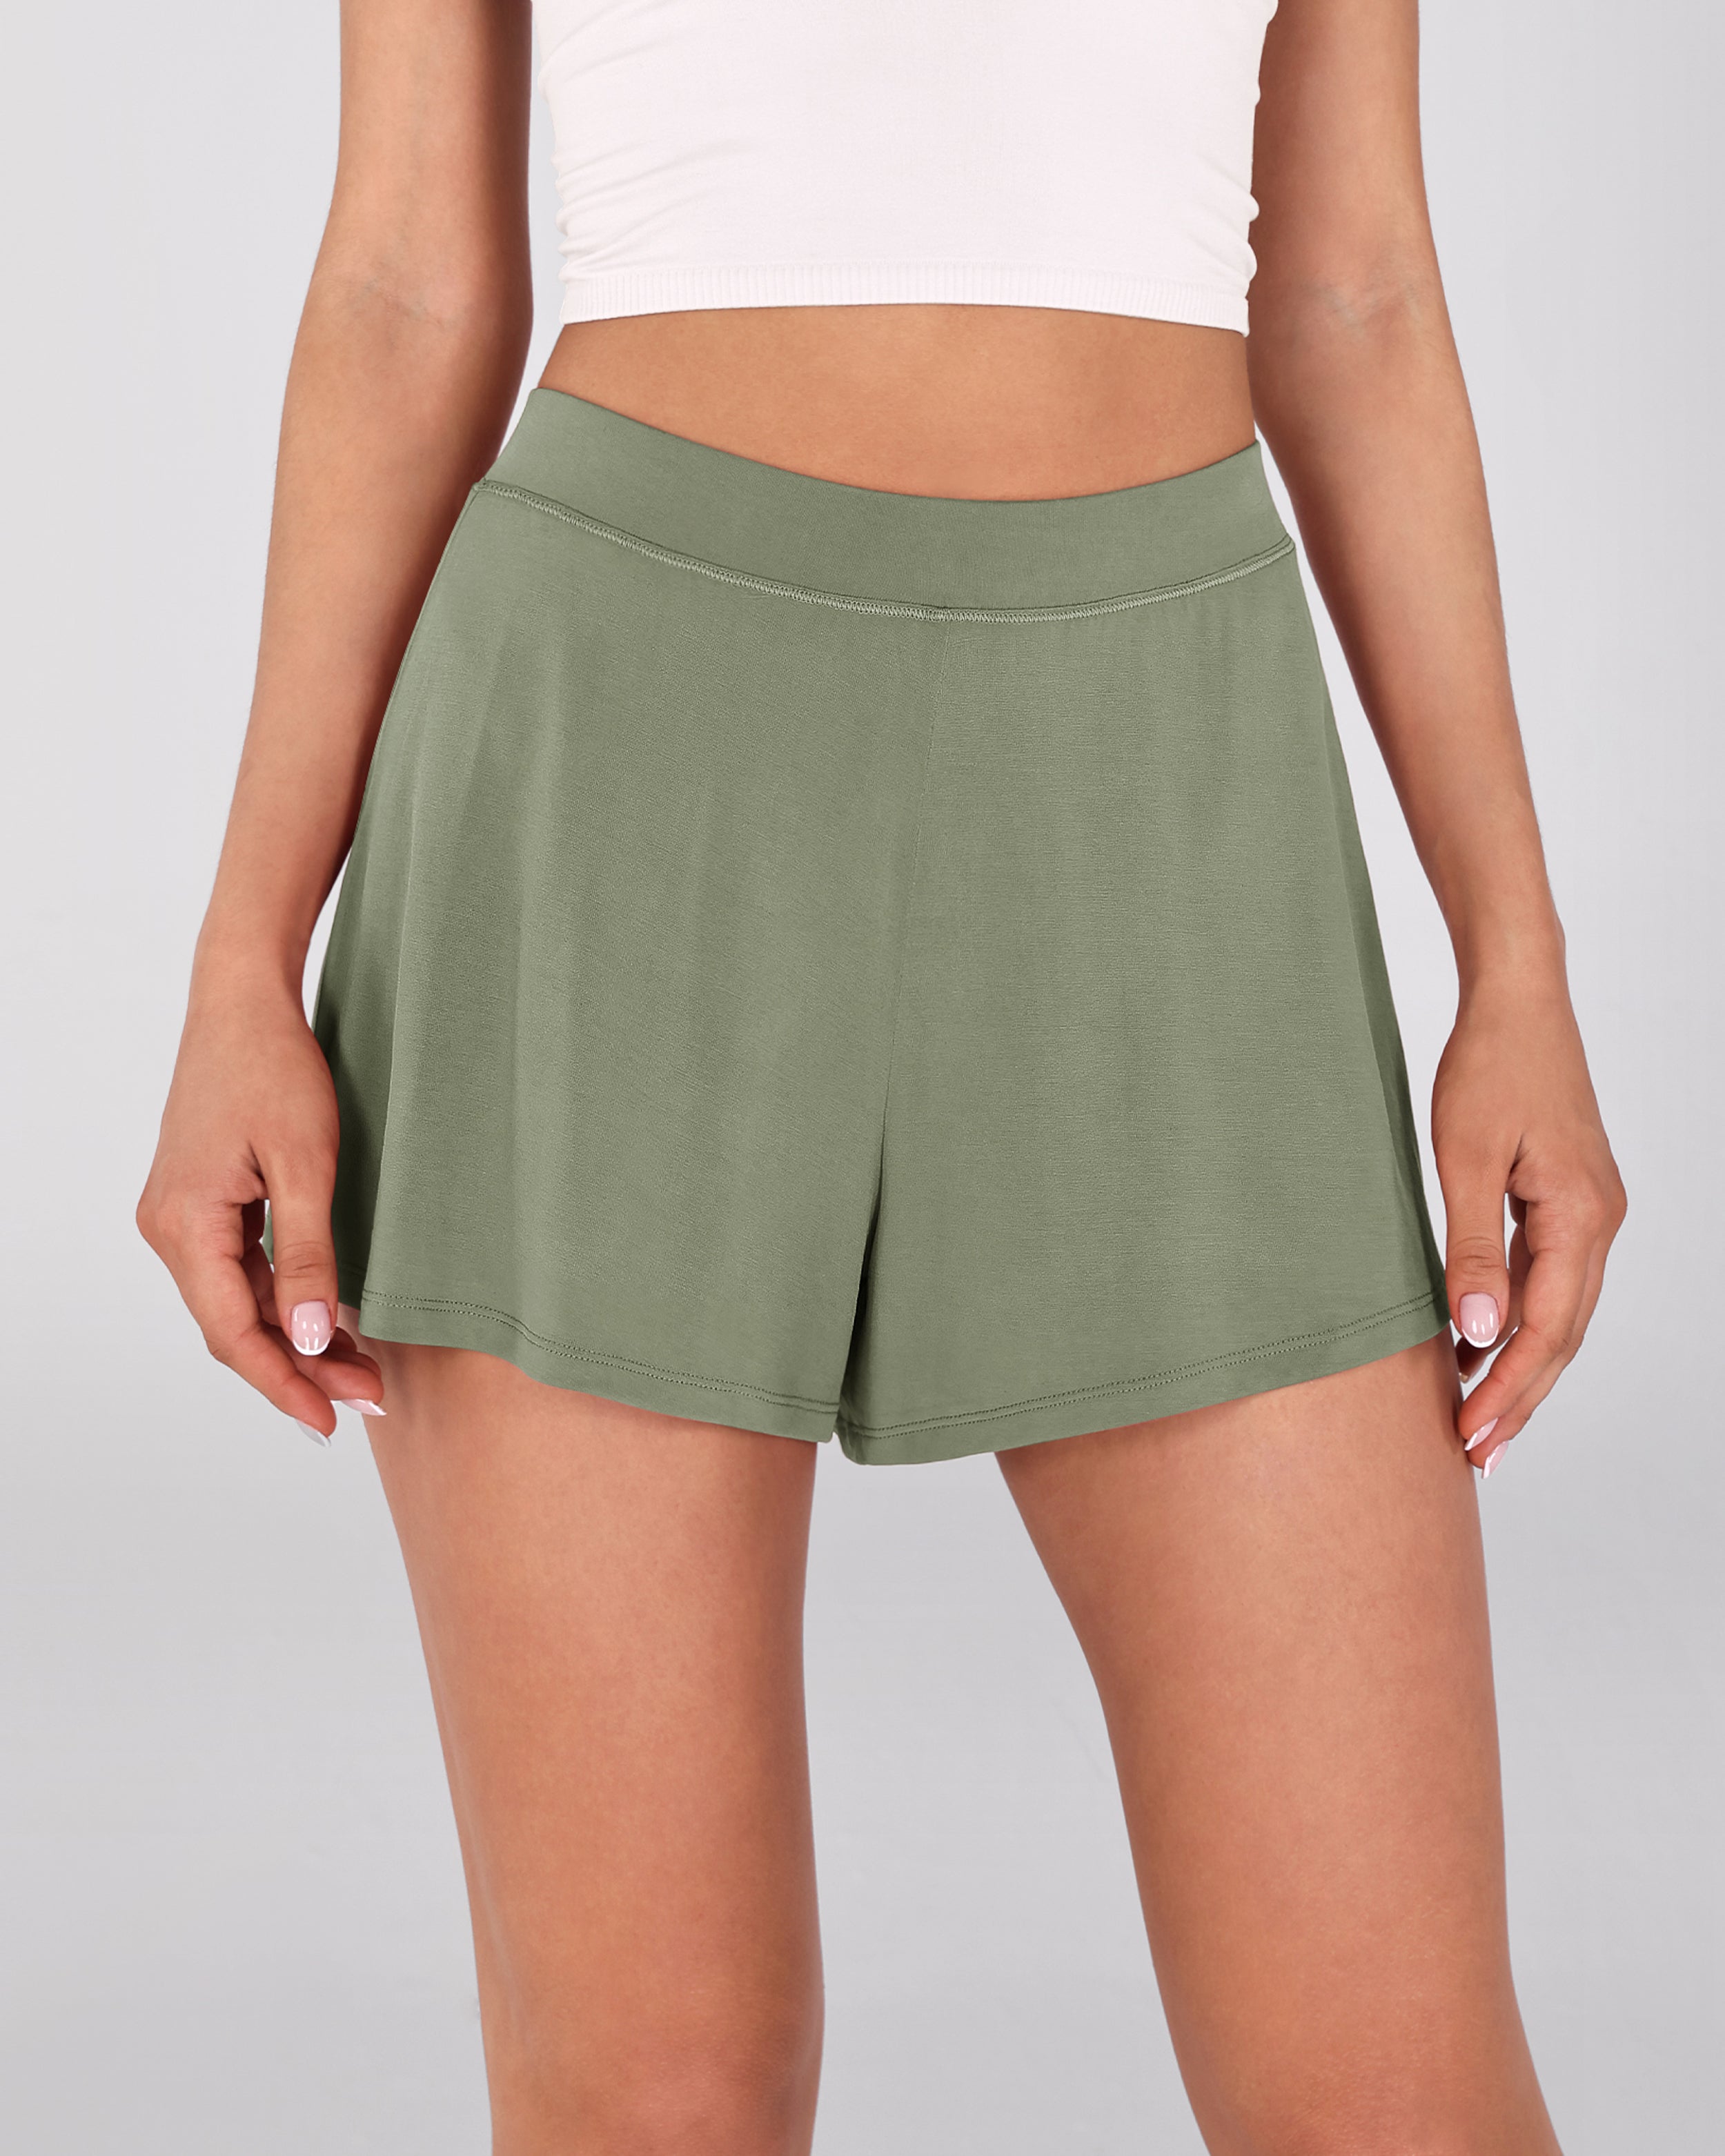 Modal Soft Lounge Shorts Sage Green - ododos